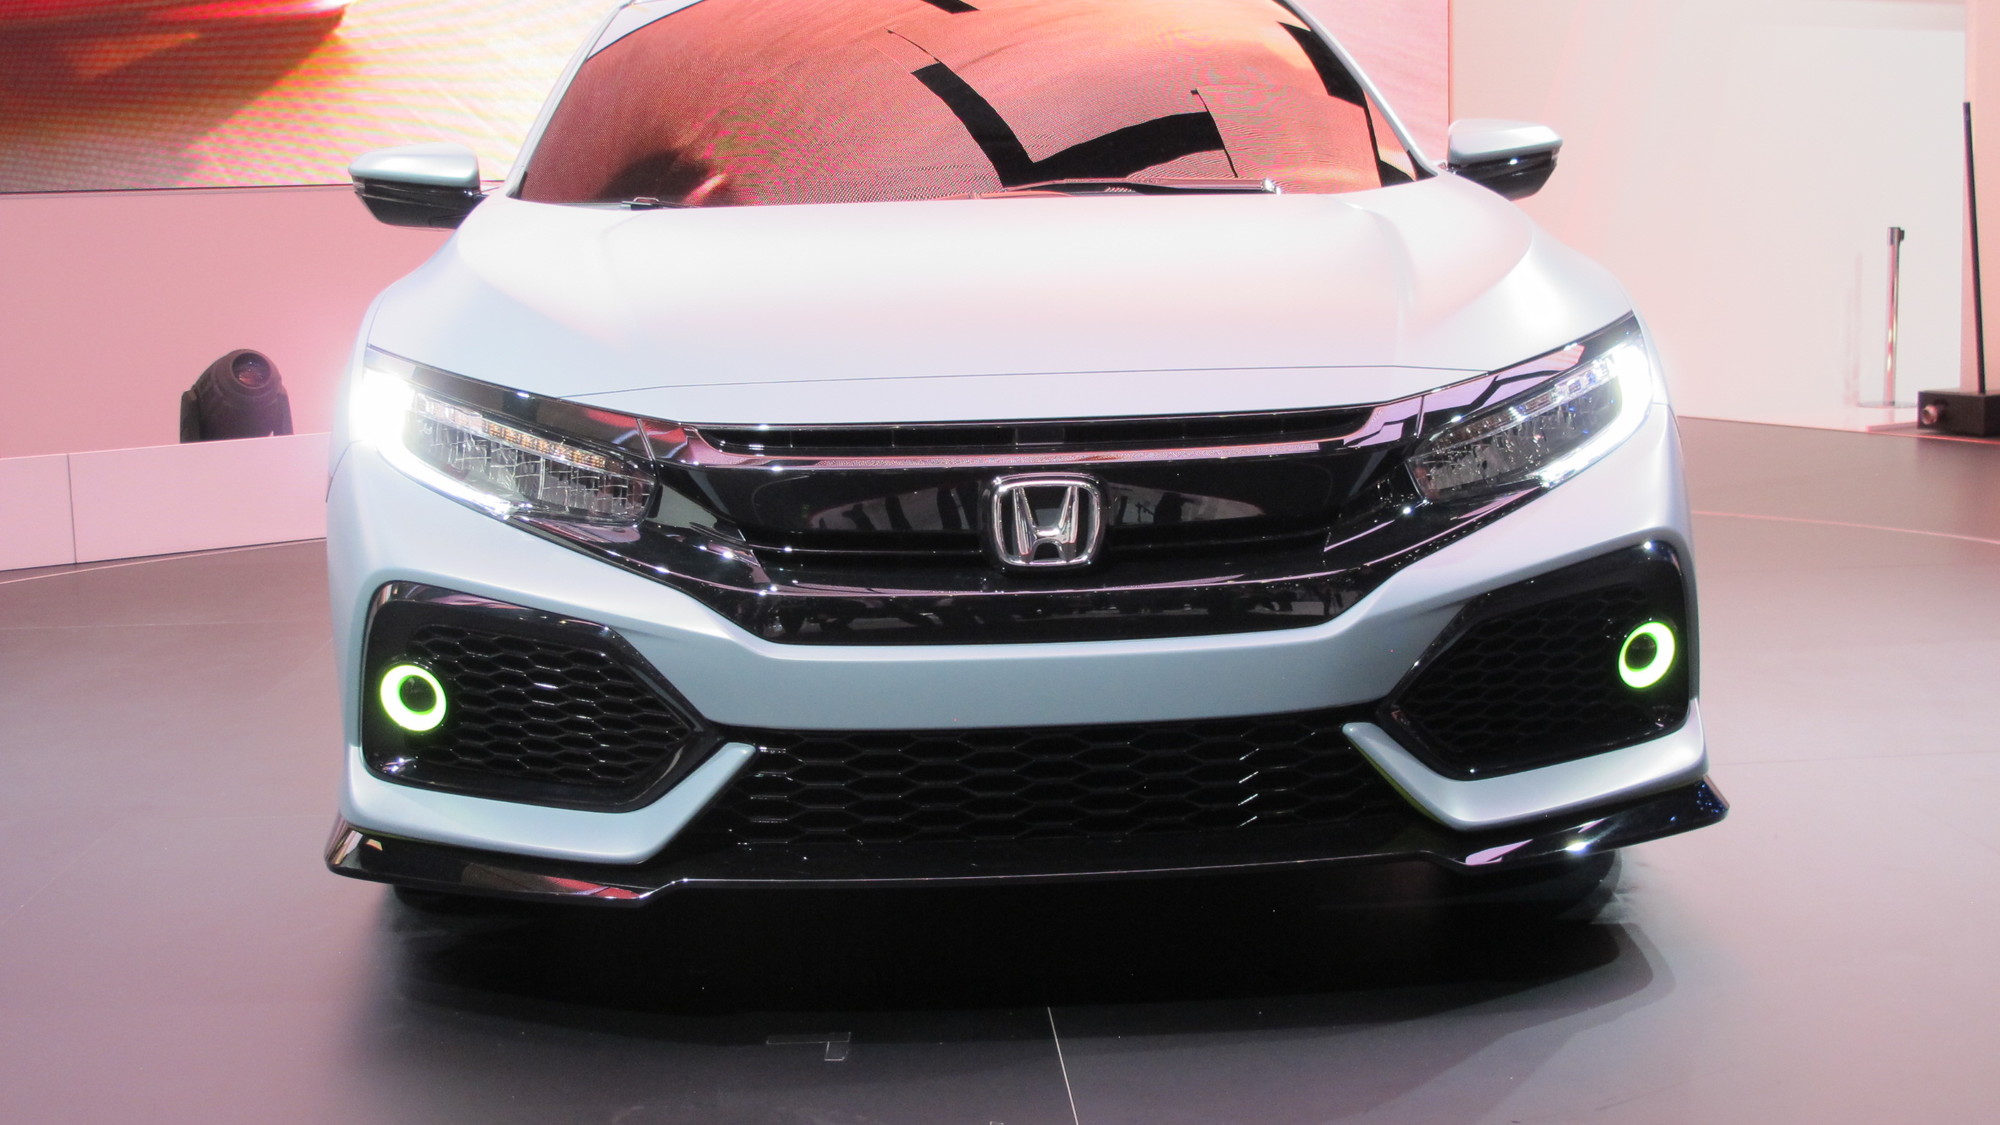 2017 Honda Civic Hatchback prototype, 2016 Geneva Motor Show